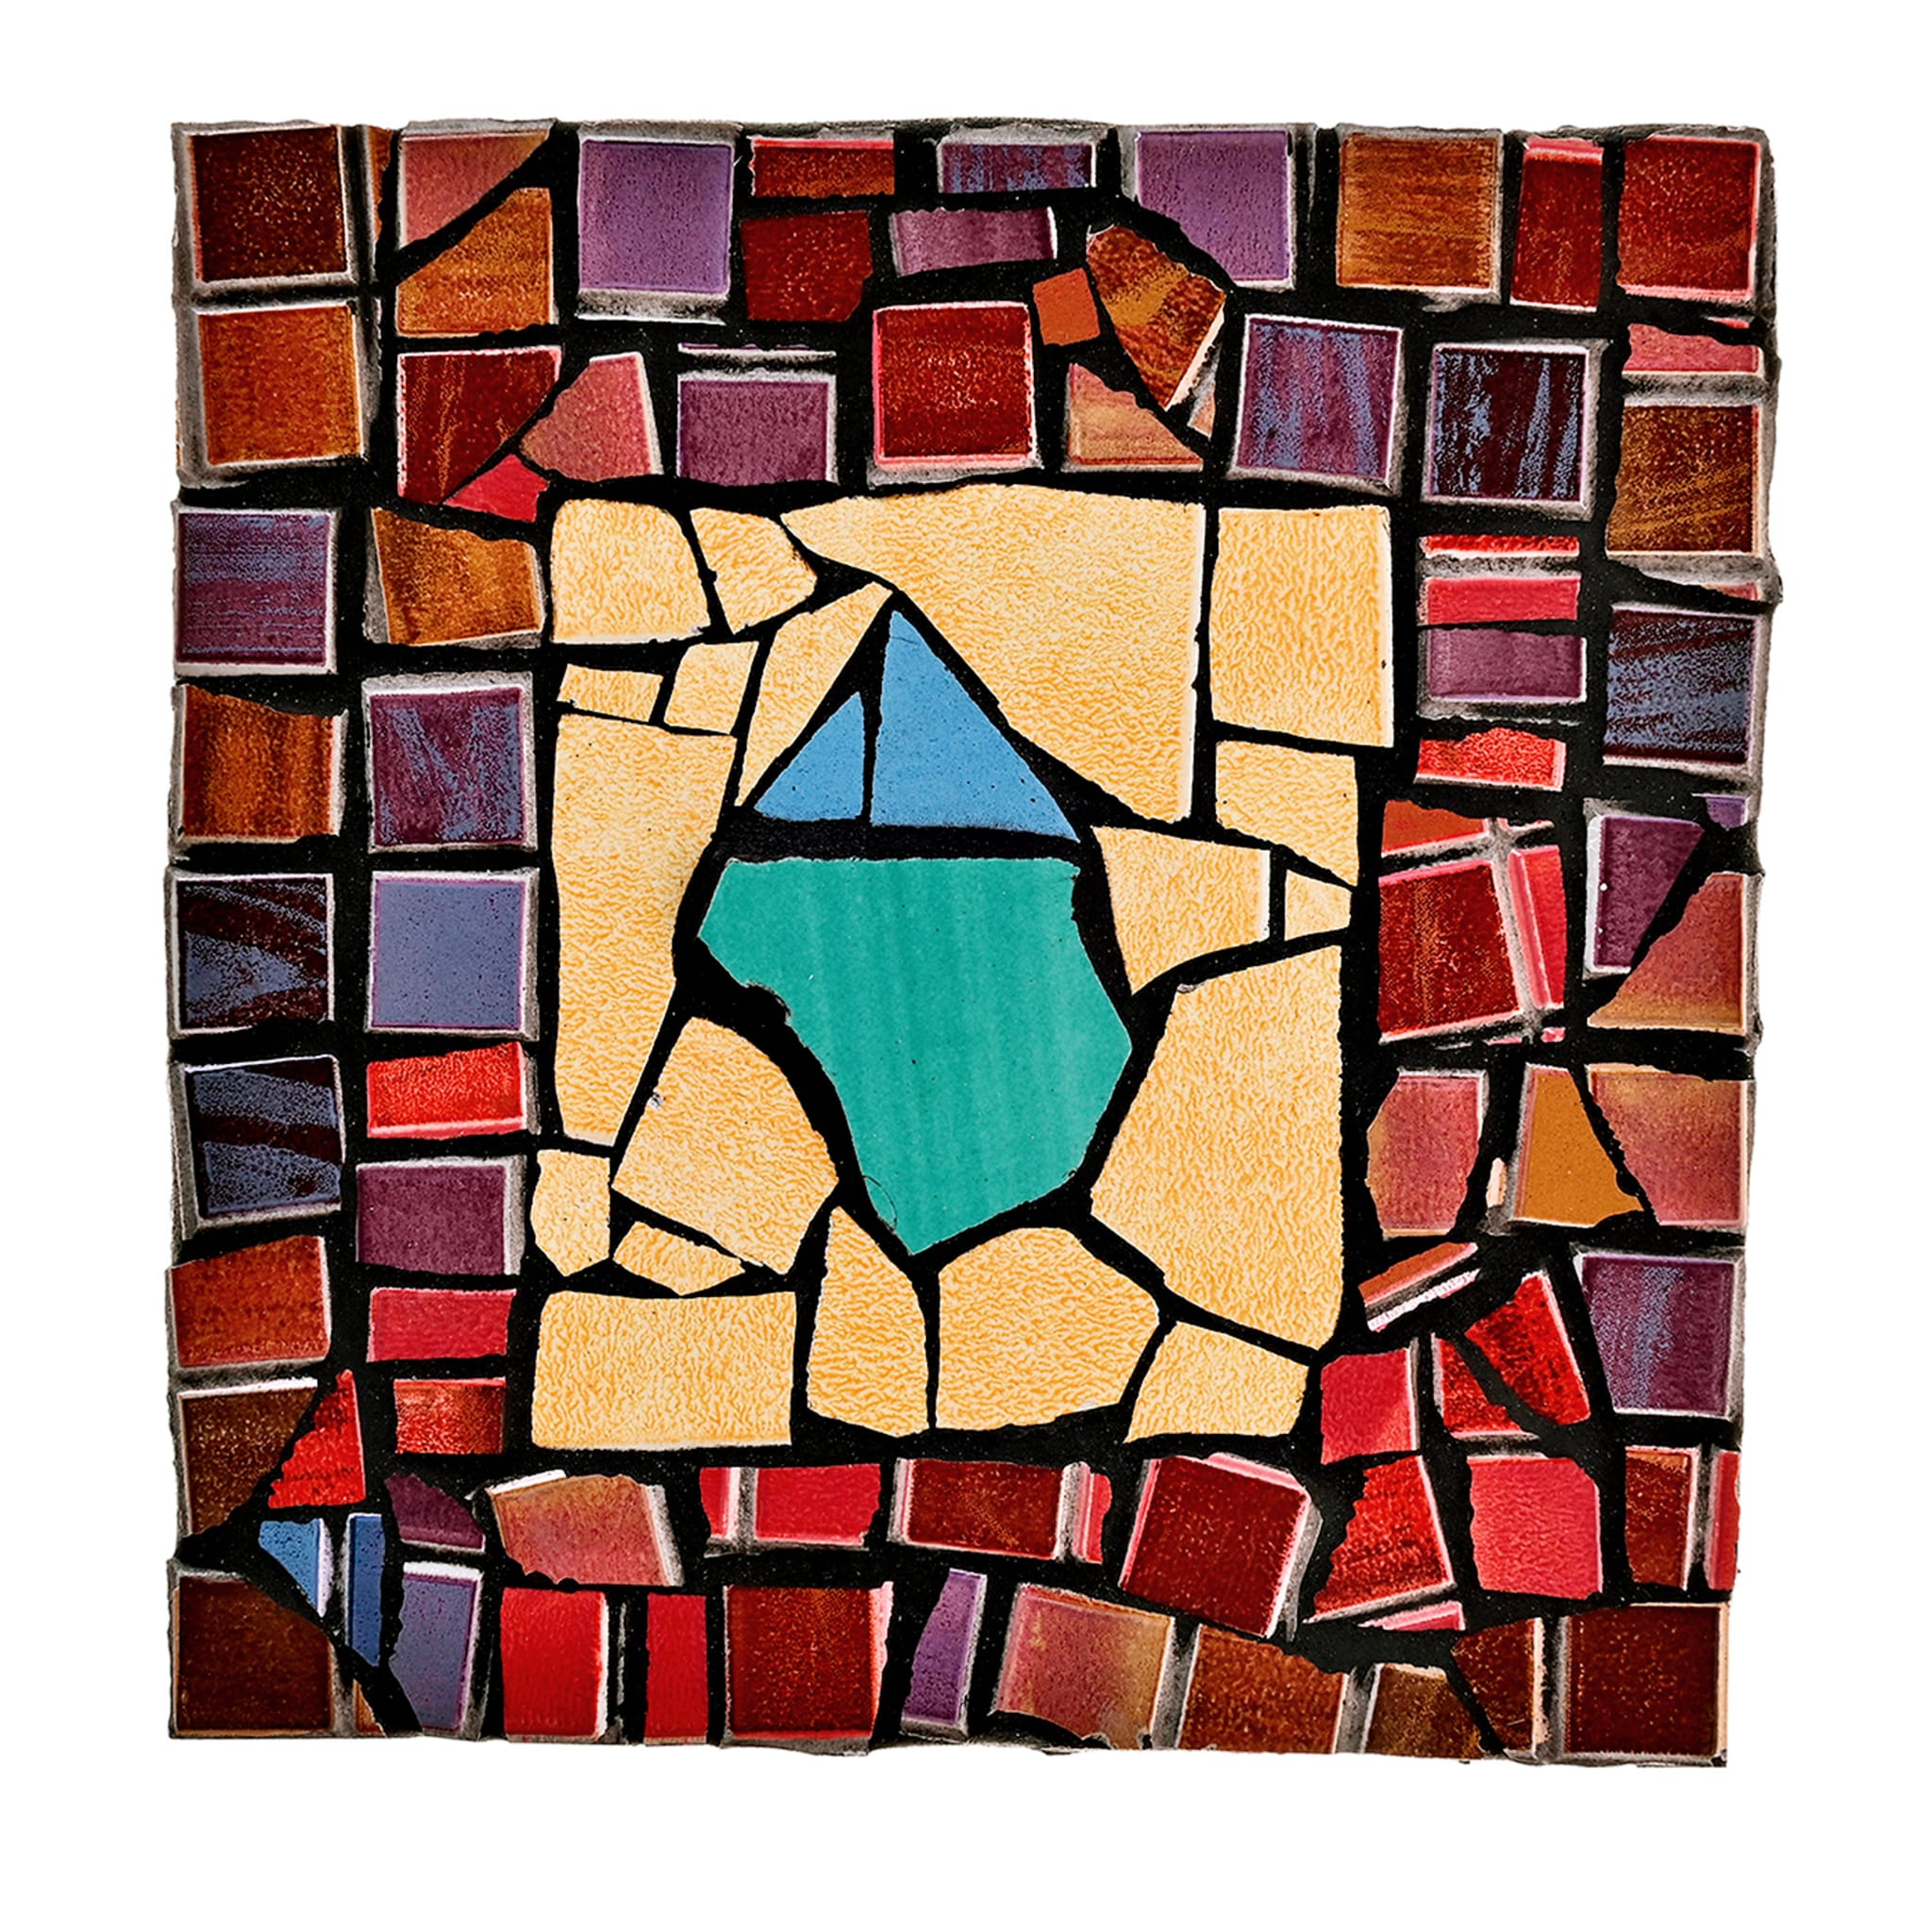 Alchemical Vessel Mosaic #2 - Main view